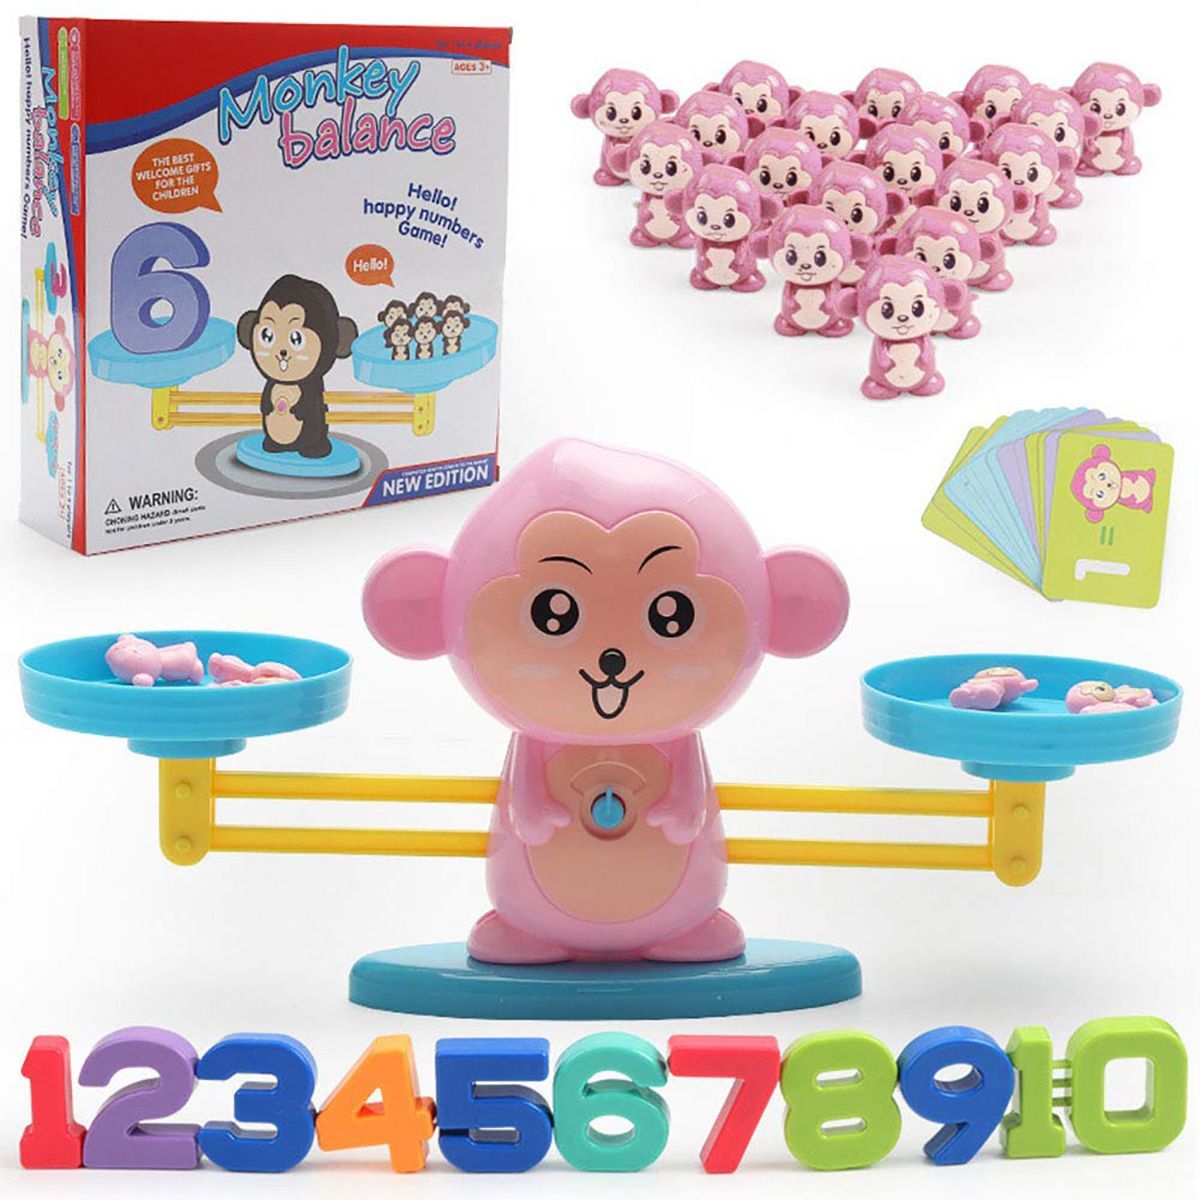 Kids-Early-Educational-Baby-Scale-Balance-Math-Game-Children-Montessori-Intelligence-Toys-1579036